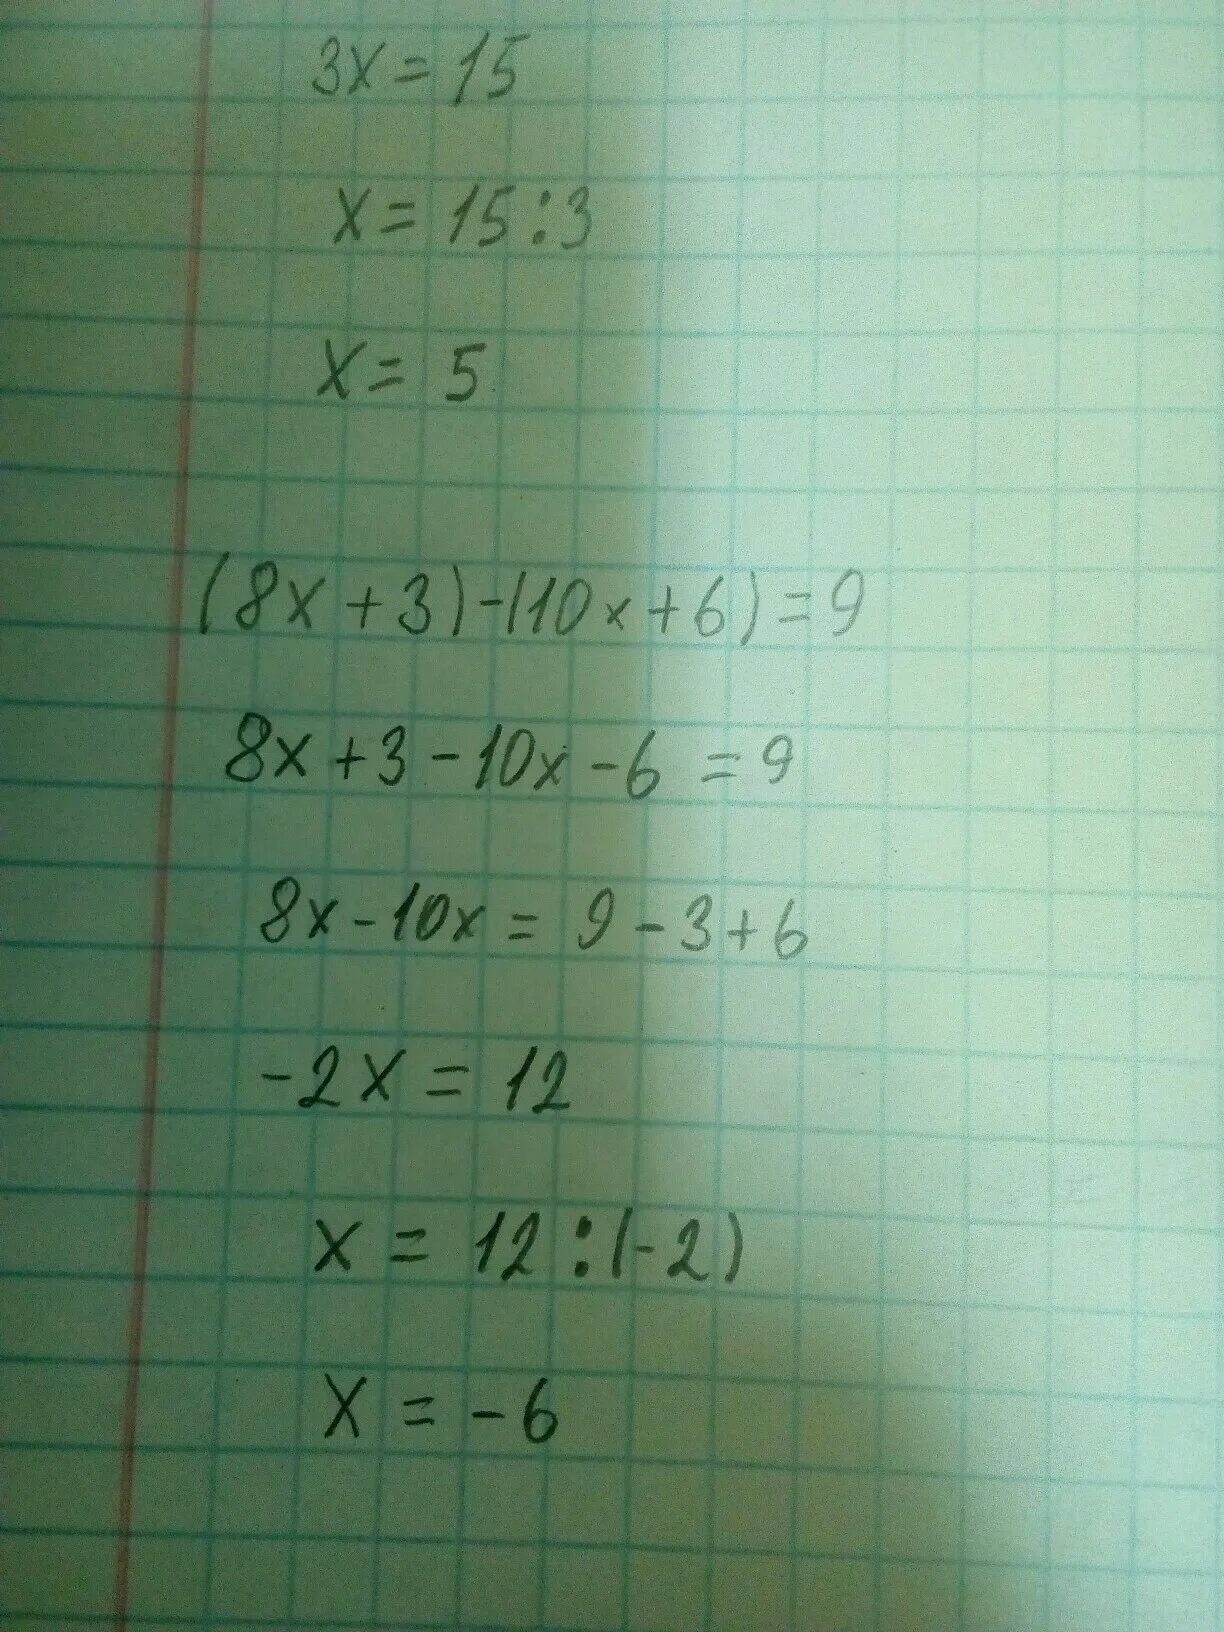 10x 3 12 x 1. (10-X)(10+X). (8x+3)-(10x+6)=9. (2x-10)-(3x-4)=6. 4x-10=x+8 ответ.